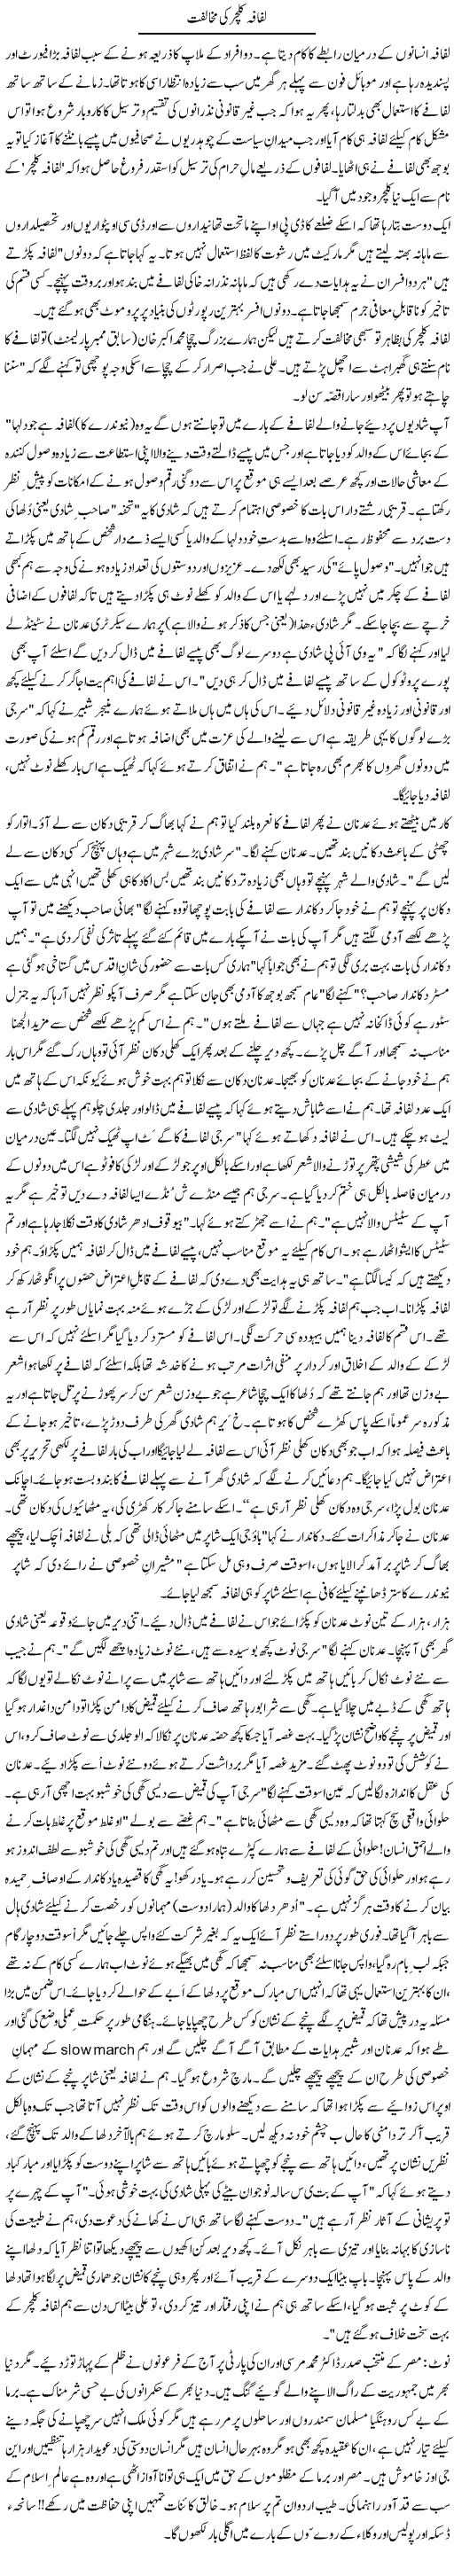 Lifafa Culture Ki Mukhalifat | Zulfiqar Ahmed Cheema | Daily Urdu Columns